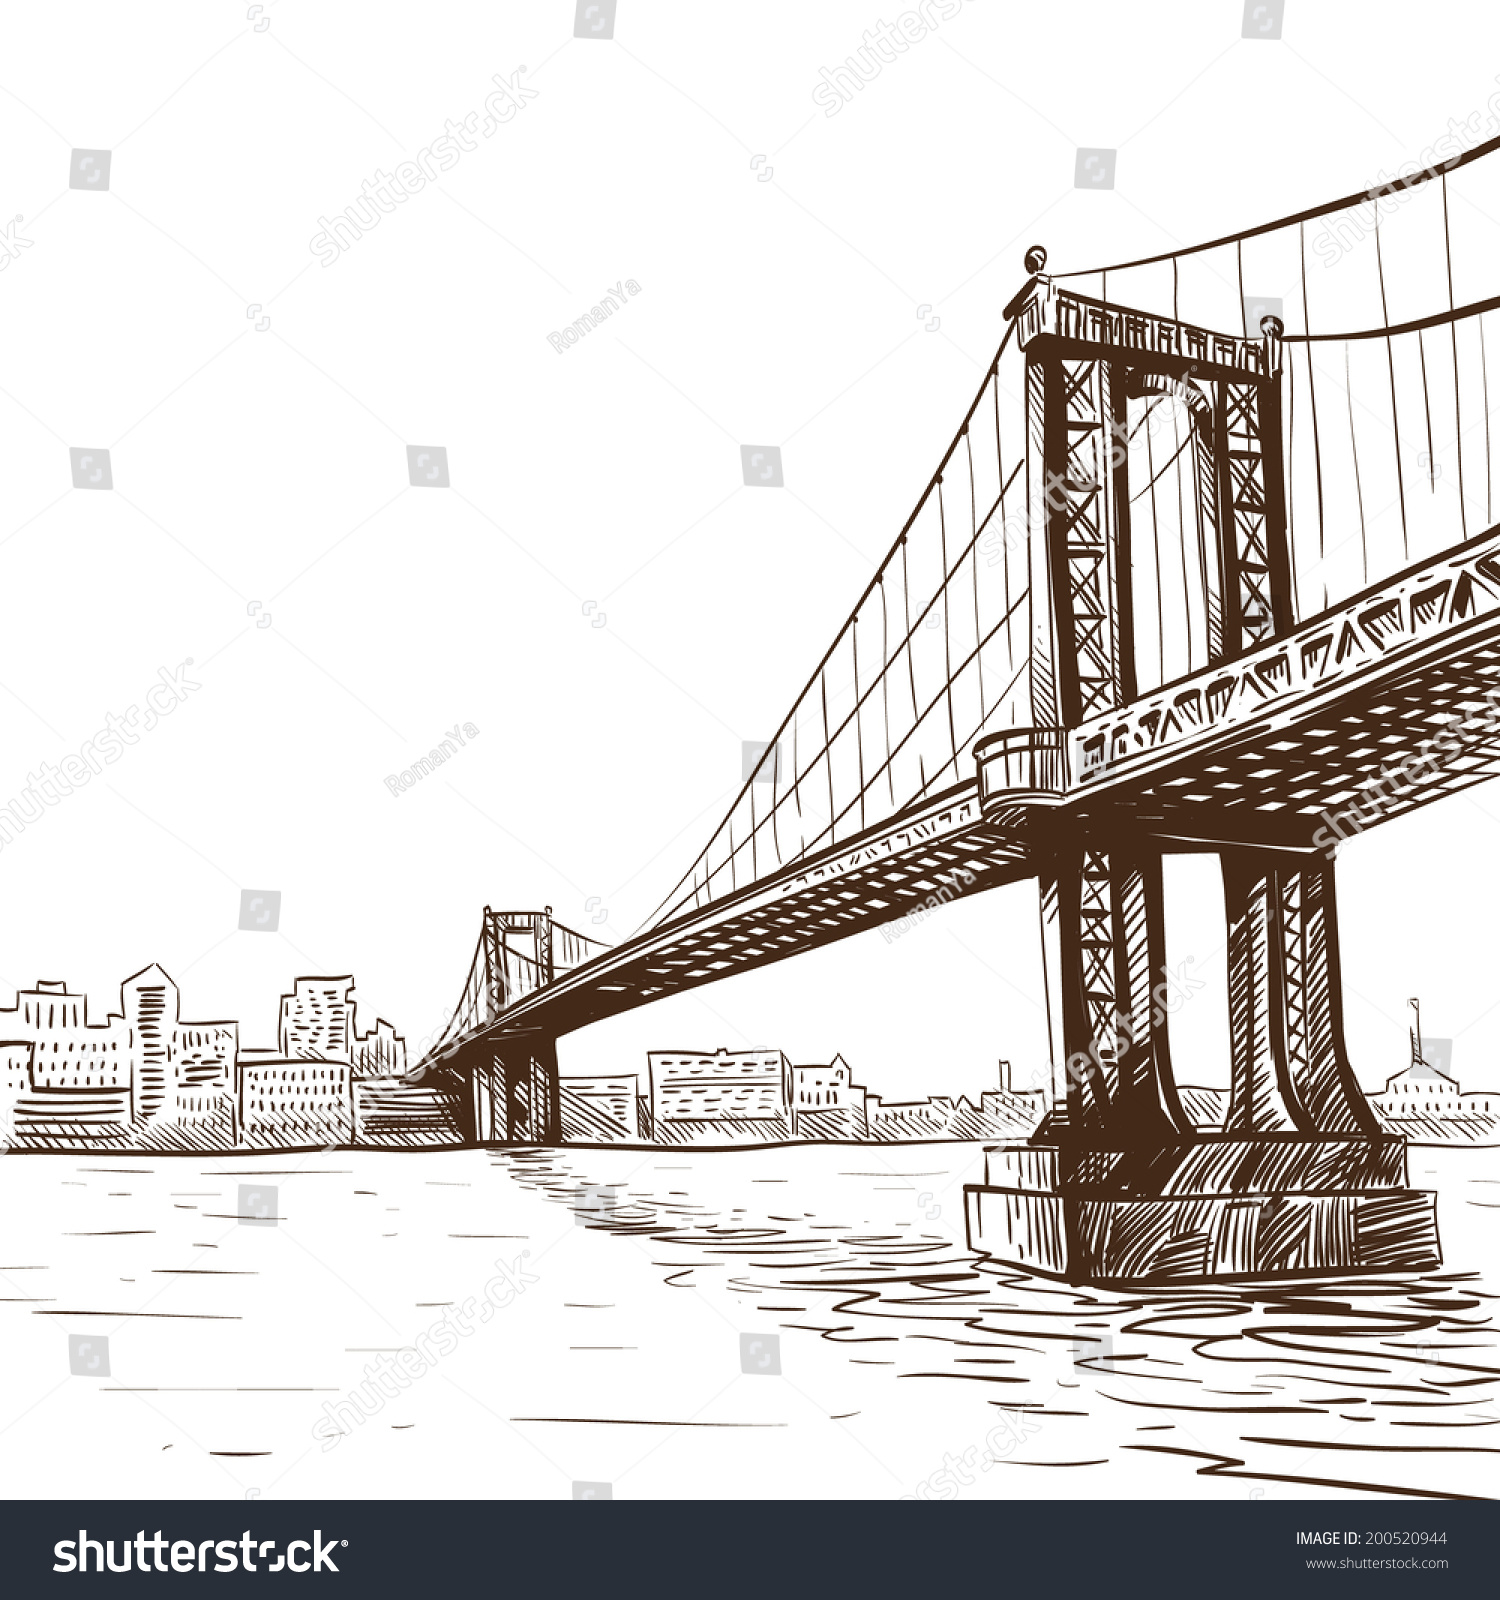 Hand Drawn Bridge, Vector Illustration - 200520944 : Shutterstock